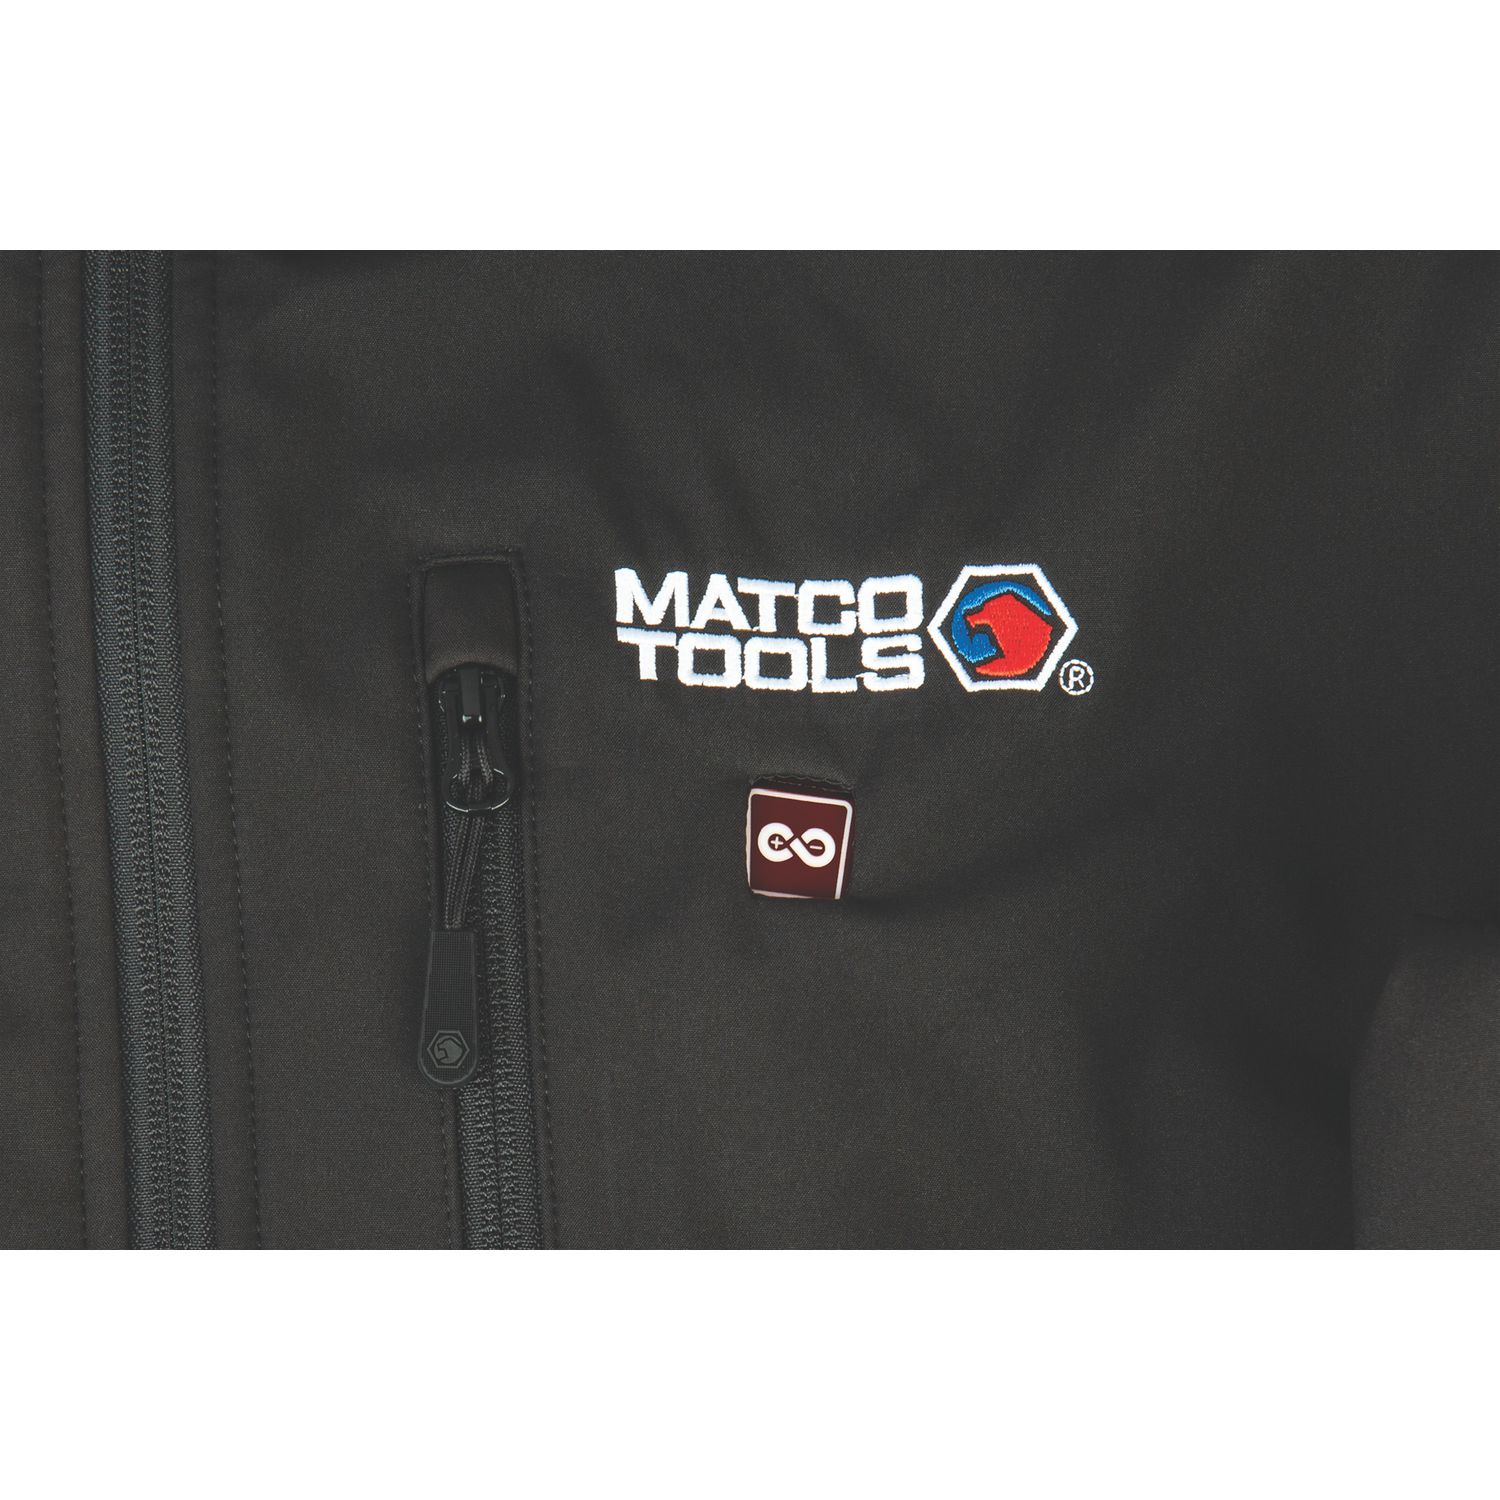 Matco tools Jacket www.np.gov.lk